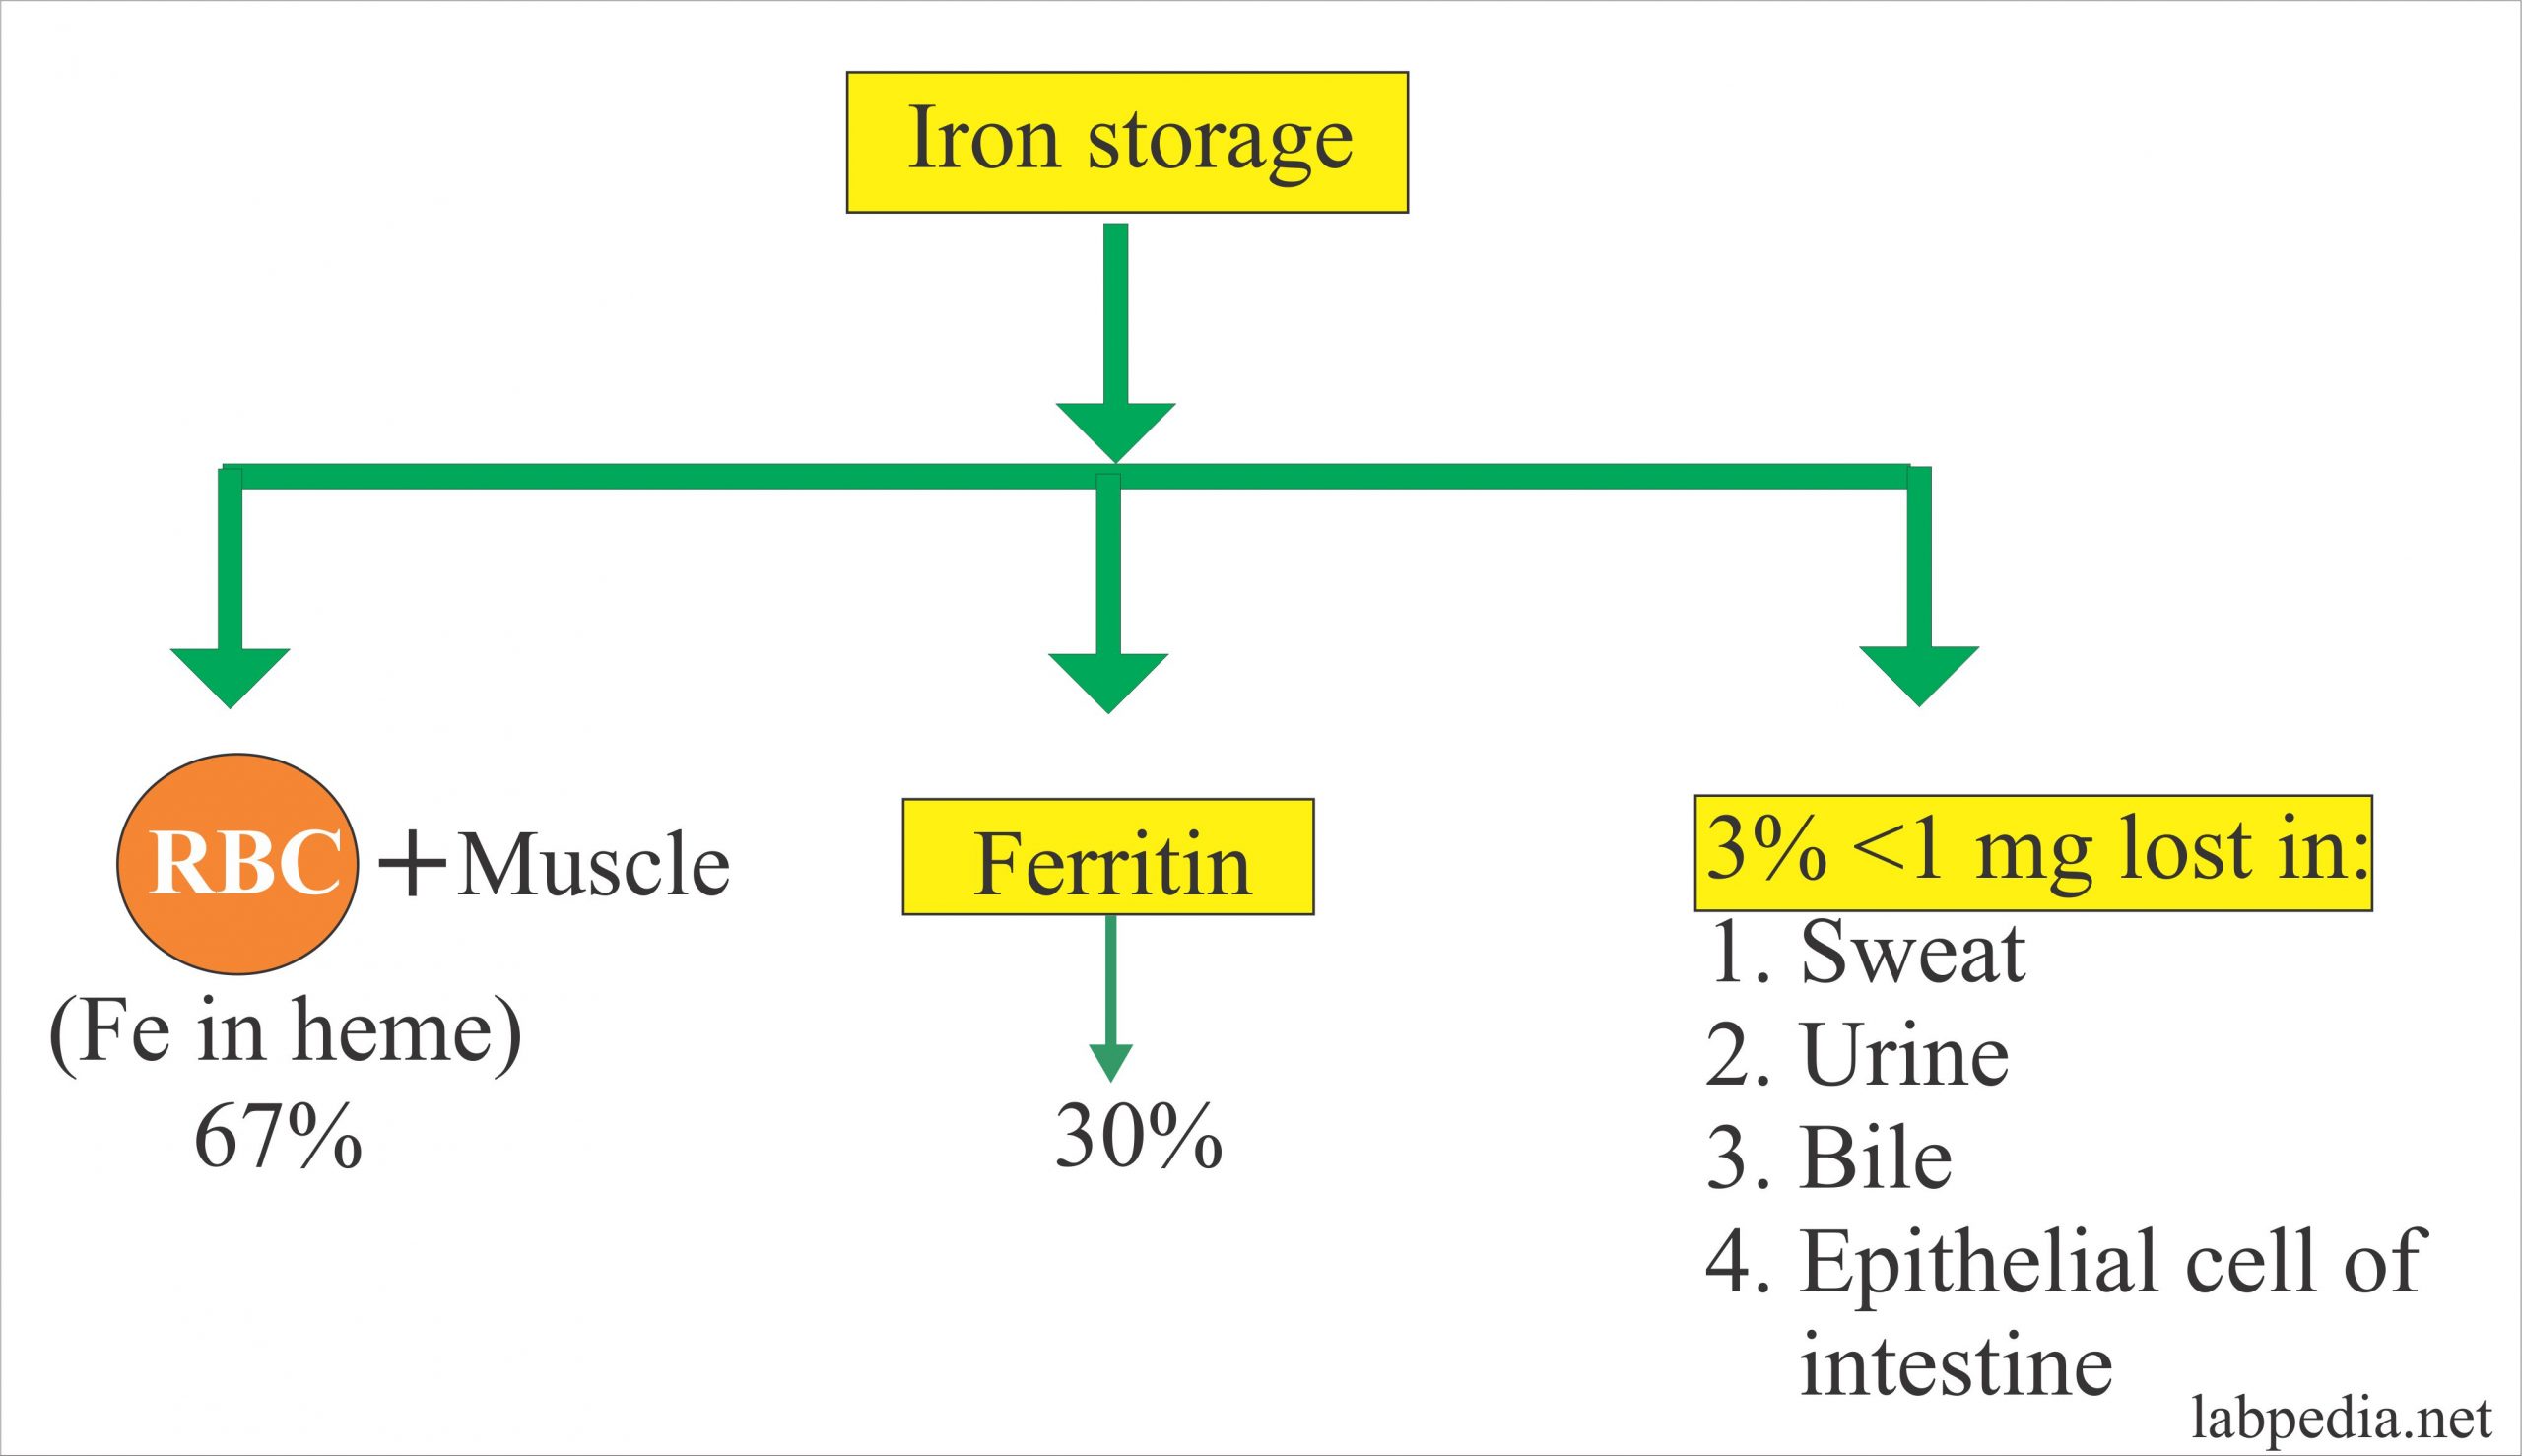 Iron storage in the body